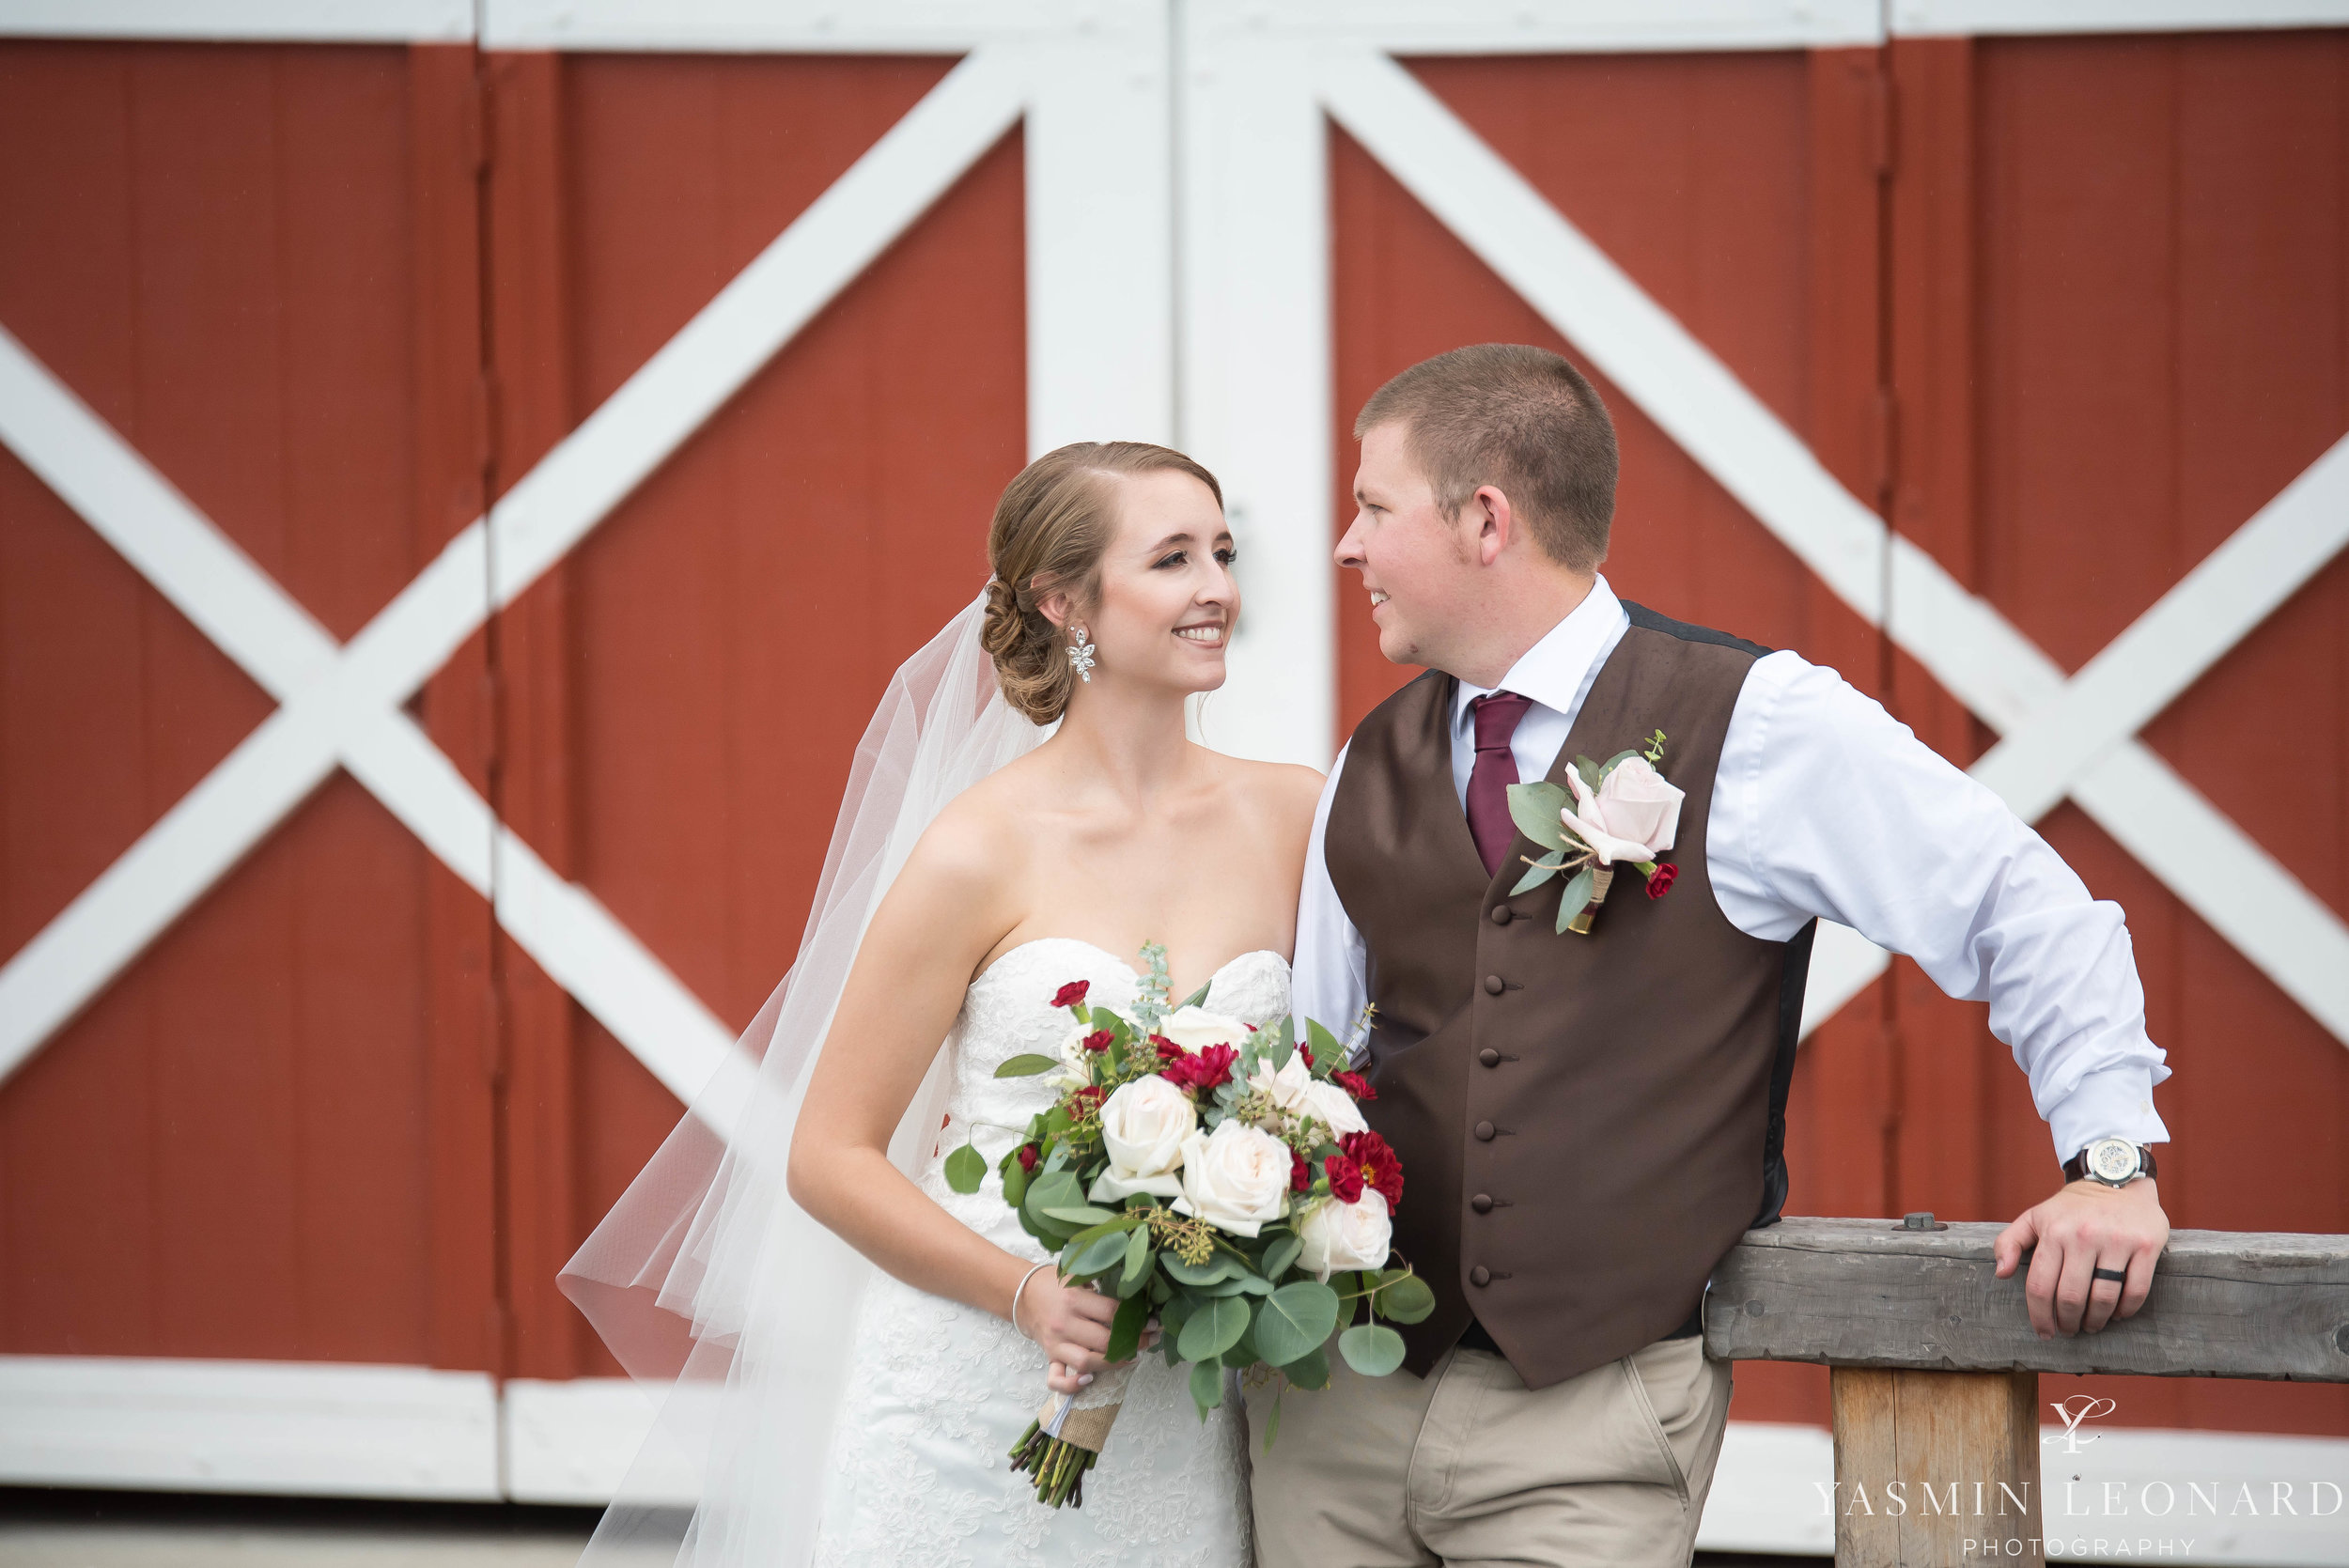 Millikan Farms - NC Wedding Venue - NC Wedding Photographer - Yasmin Leonard Photography - Rain on your wedding day-40.jpg